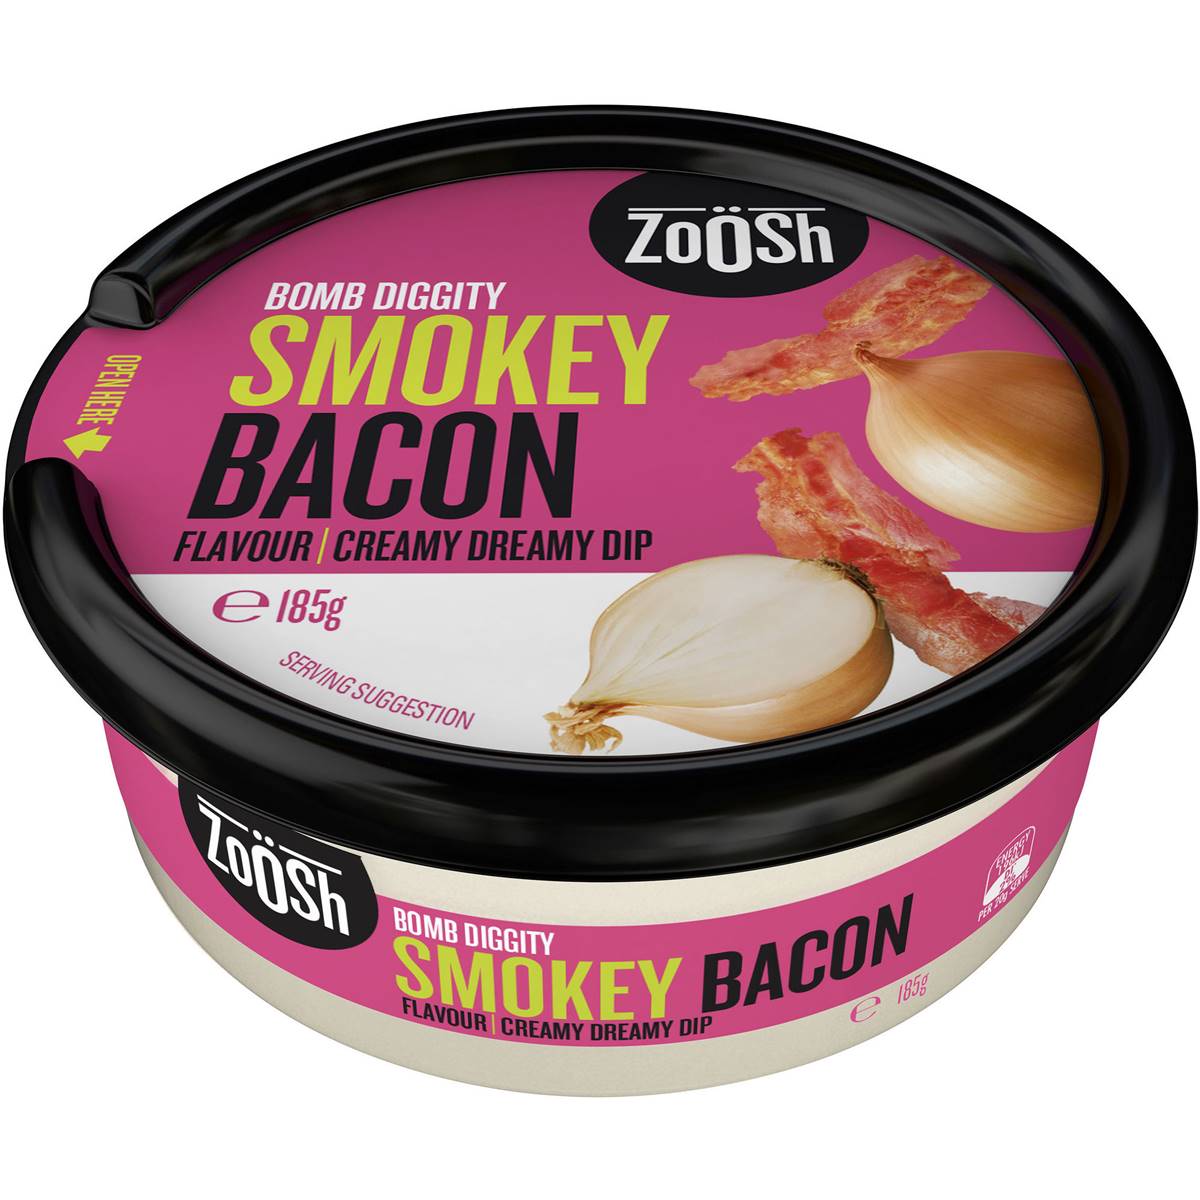 Zoosh Smokey Bacon 185g